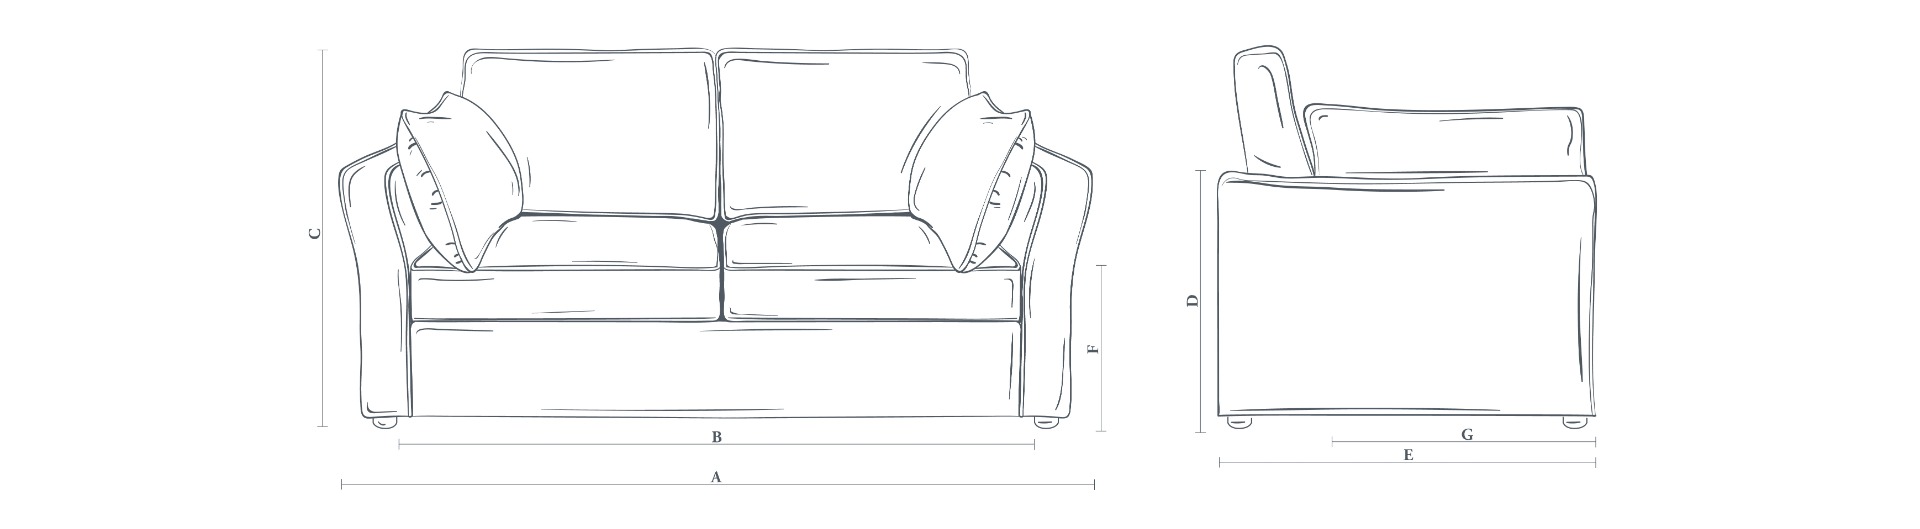 The Amesbury Sofa 3 Seater